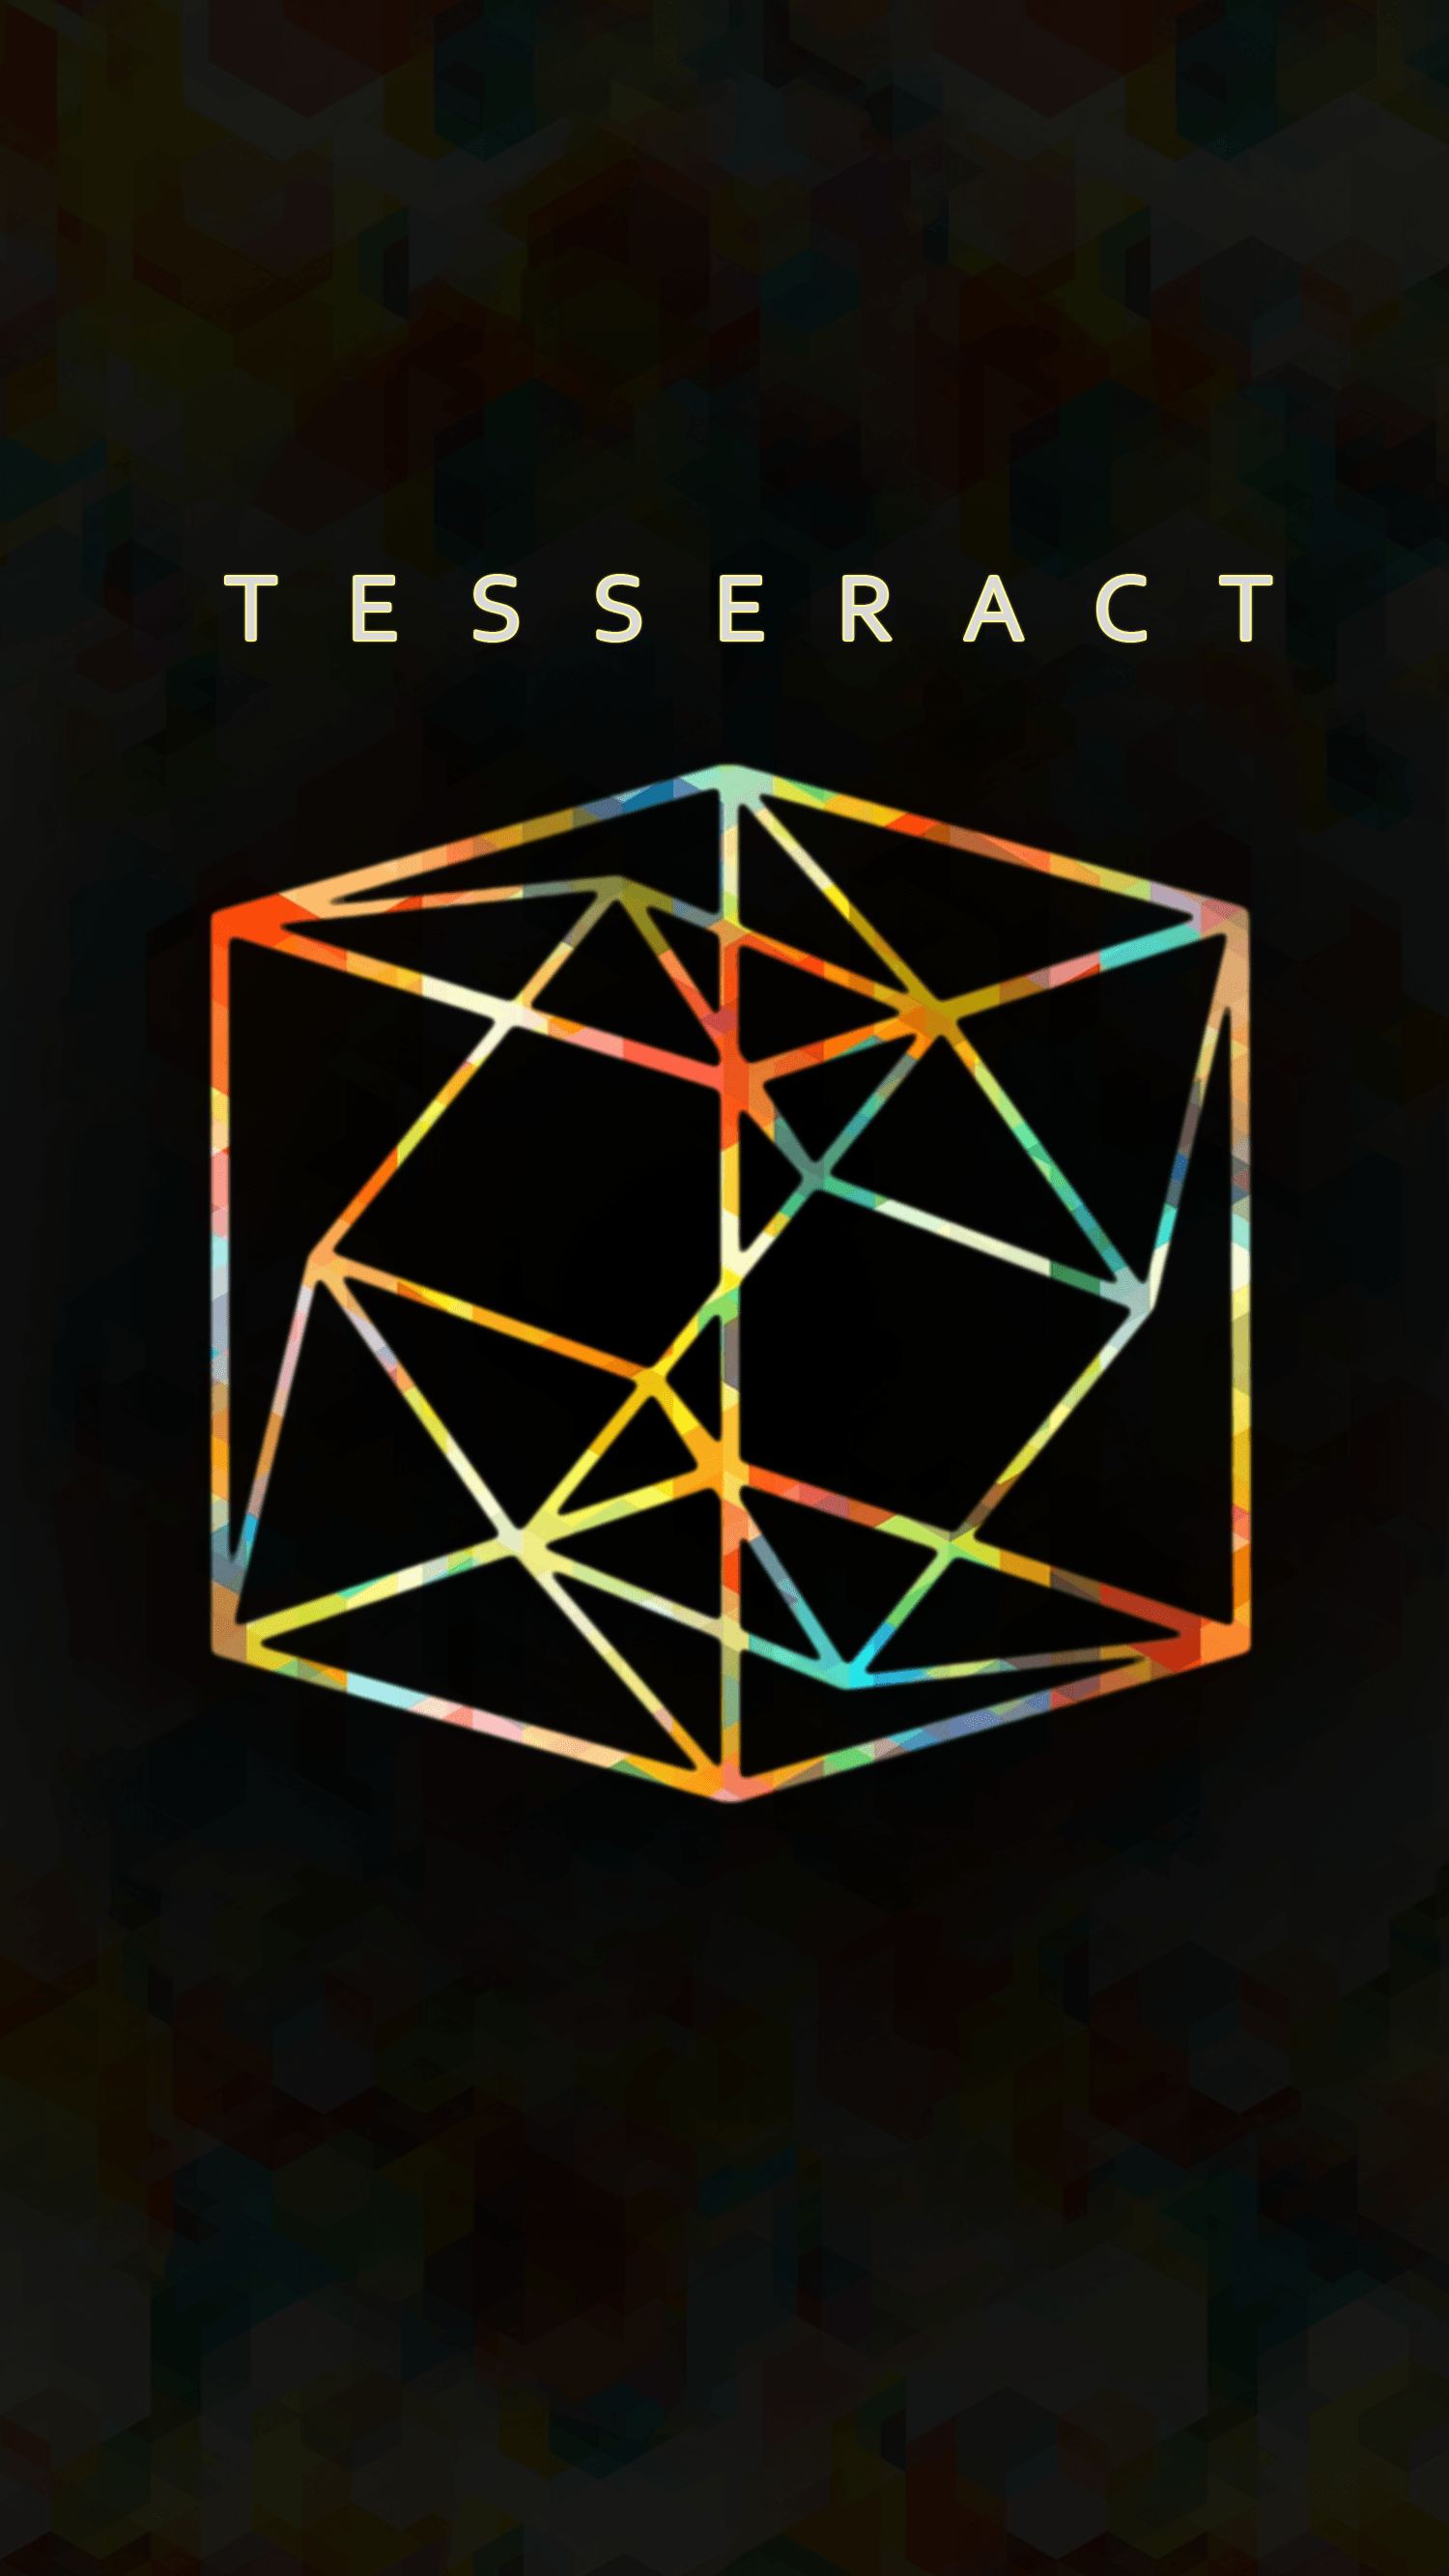 I'm making phone wallpaper from album covers I like Tesseract